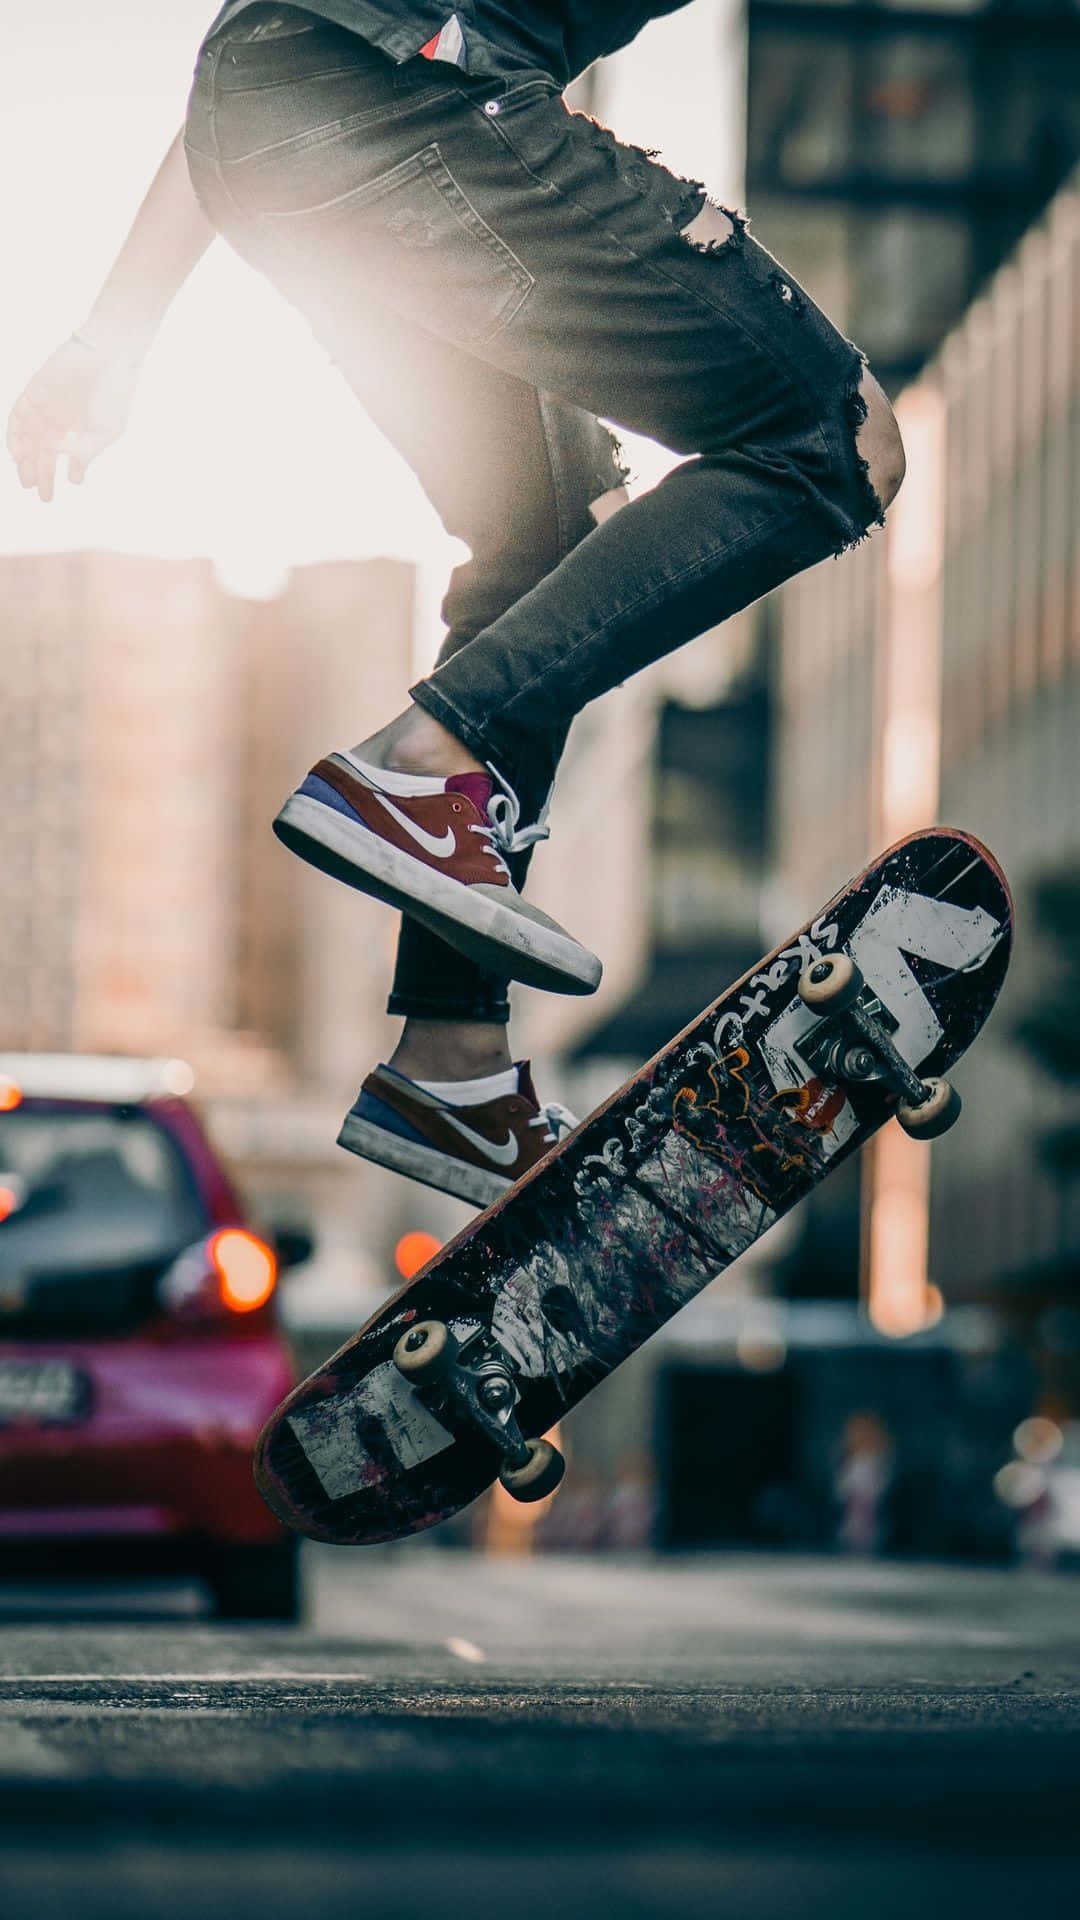 Urban Skateboard Trick Action.jpg Background